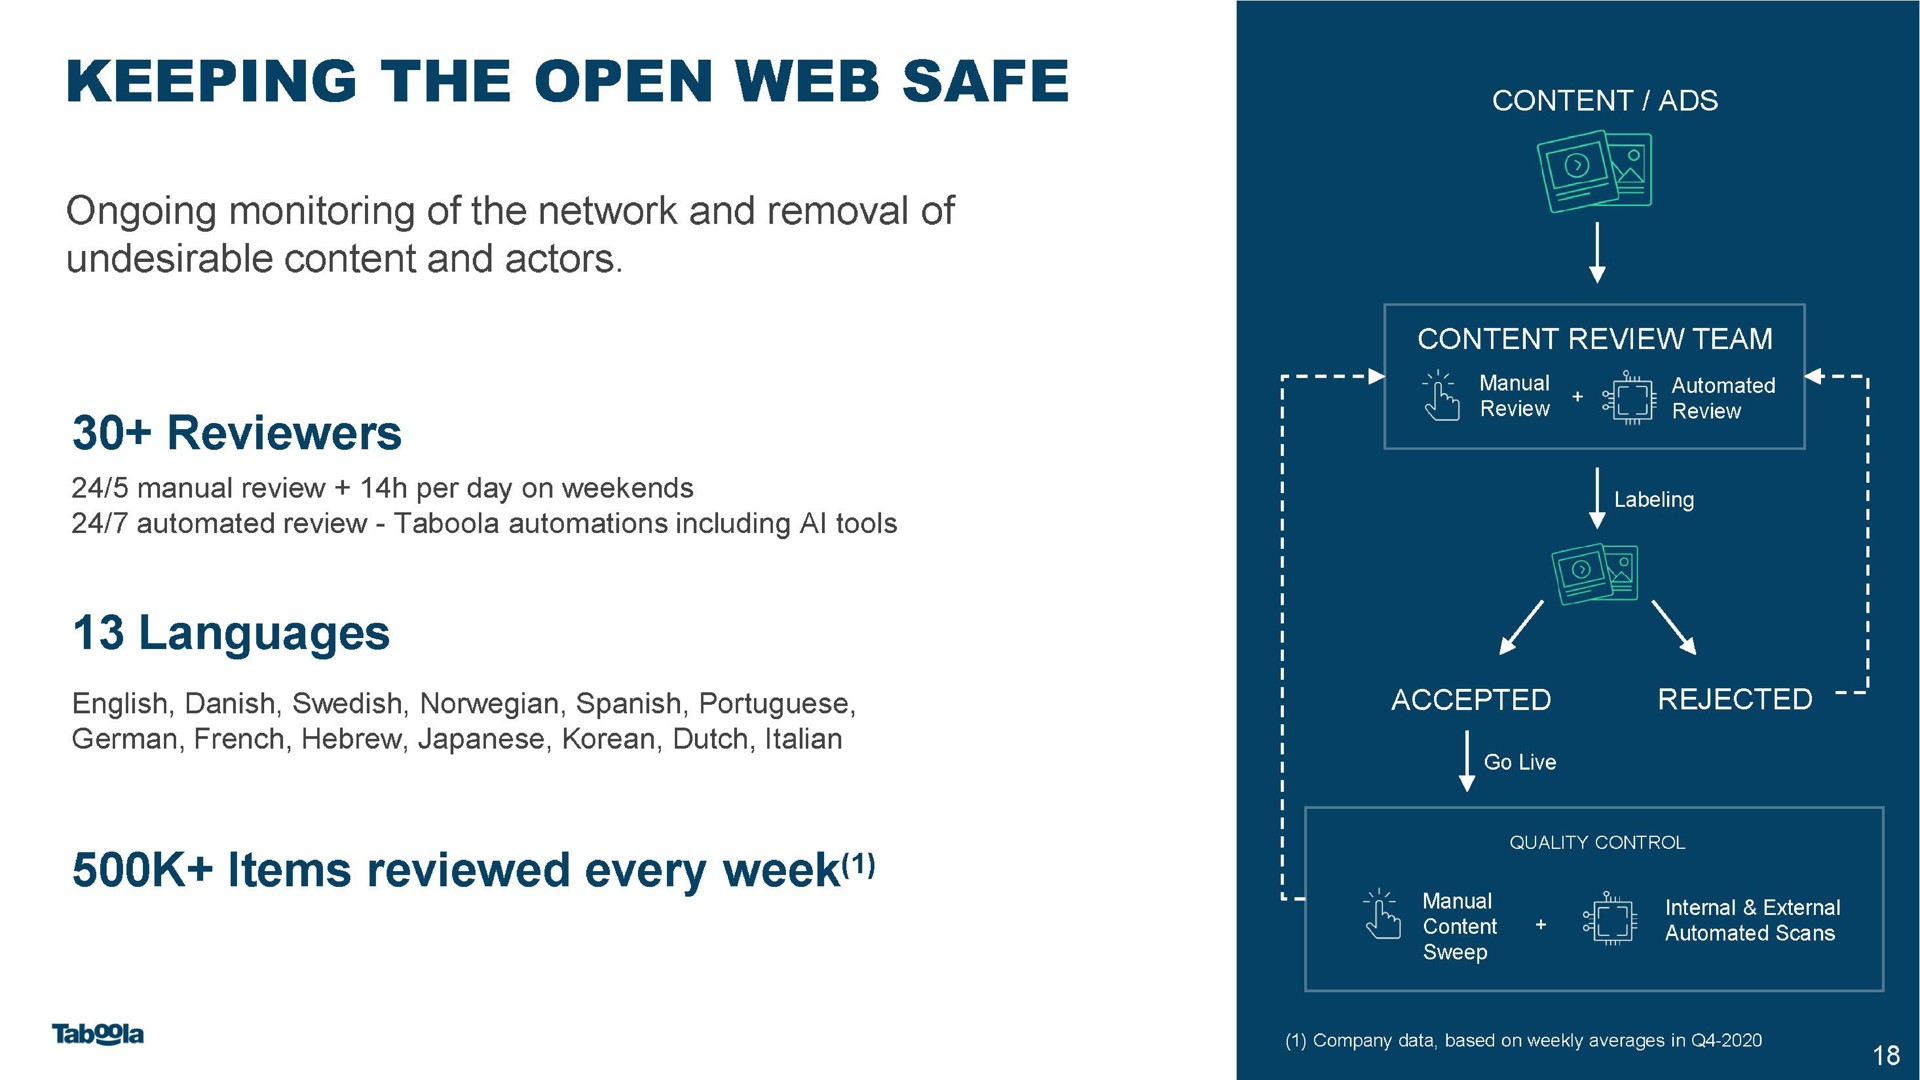 keeping the open web safe sook items reviewed every week bene | Taboola